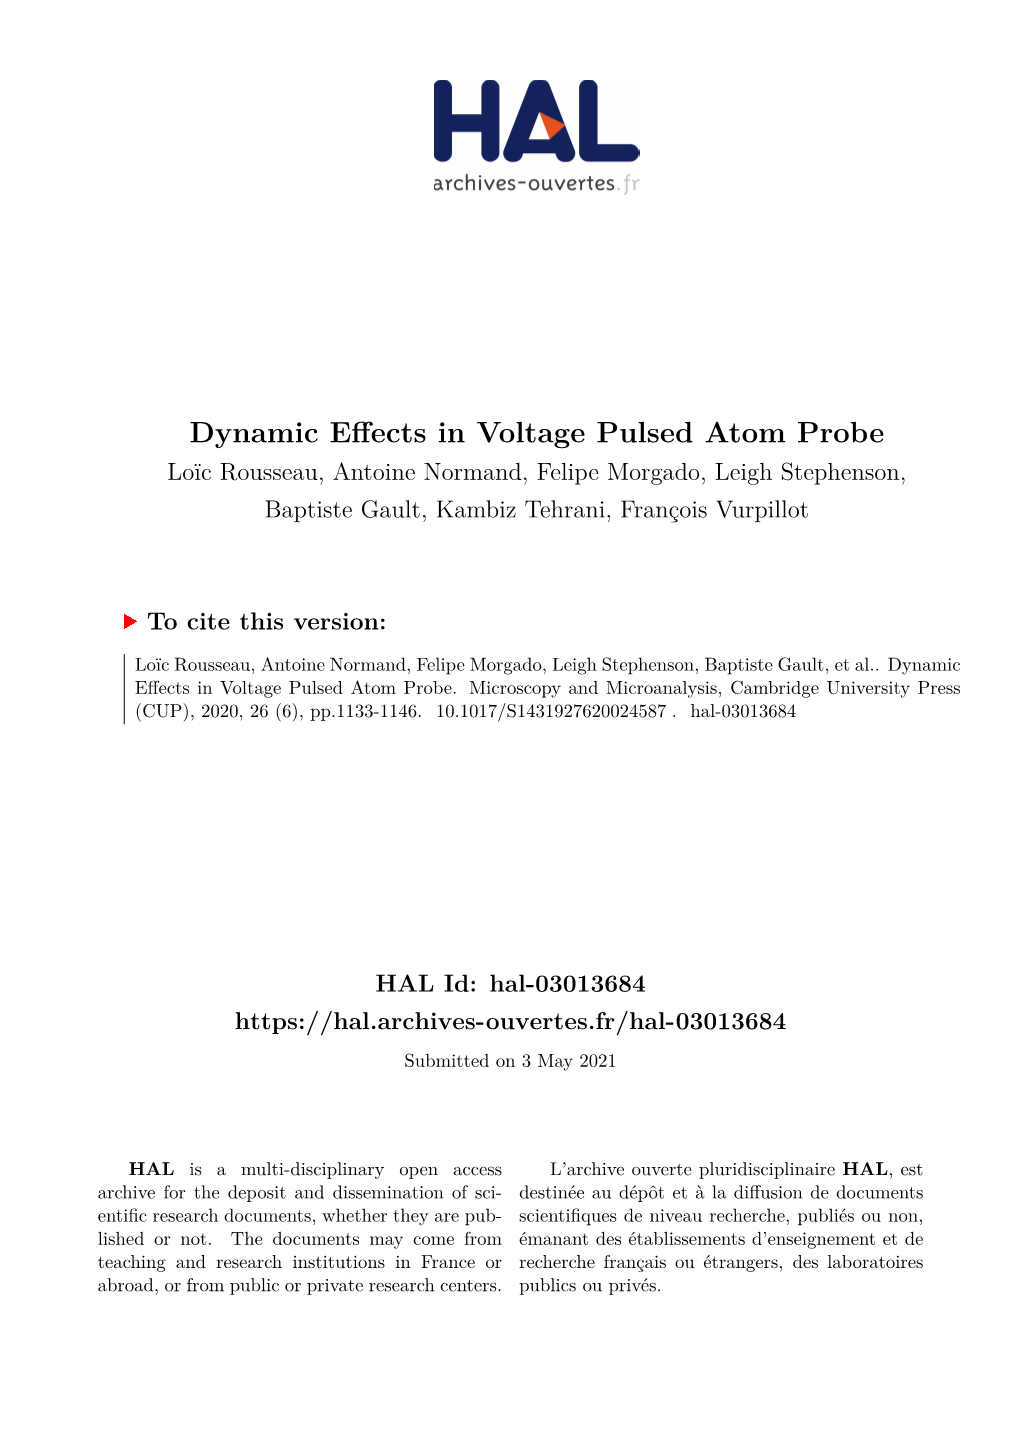 Dynamic Effects in Voltage Pulsed Atom Probe Loïc Rousseau, Antoine Normand, Felipe Morgado, Leigh Stephenson, Baptiste Gault, Kambiz Tehrani, François Vurpillot